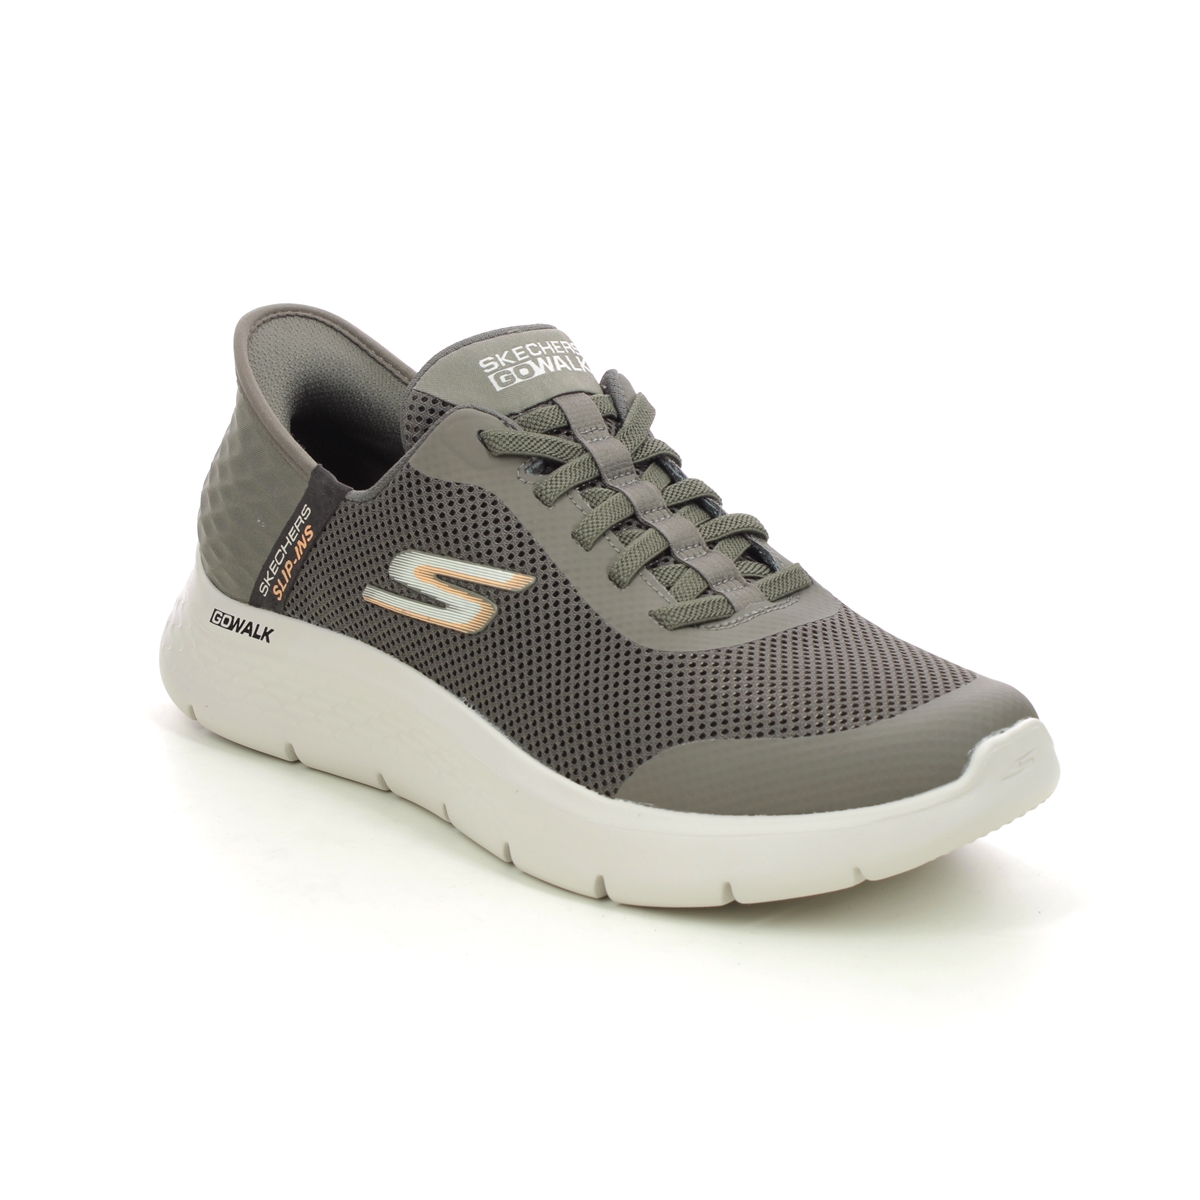 Skechers Mens Shoes New Arrival Deals | bellvalefarms.com